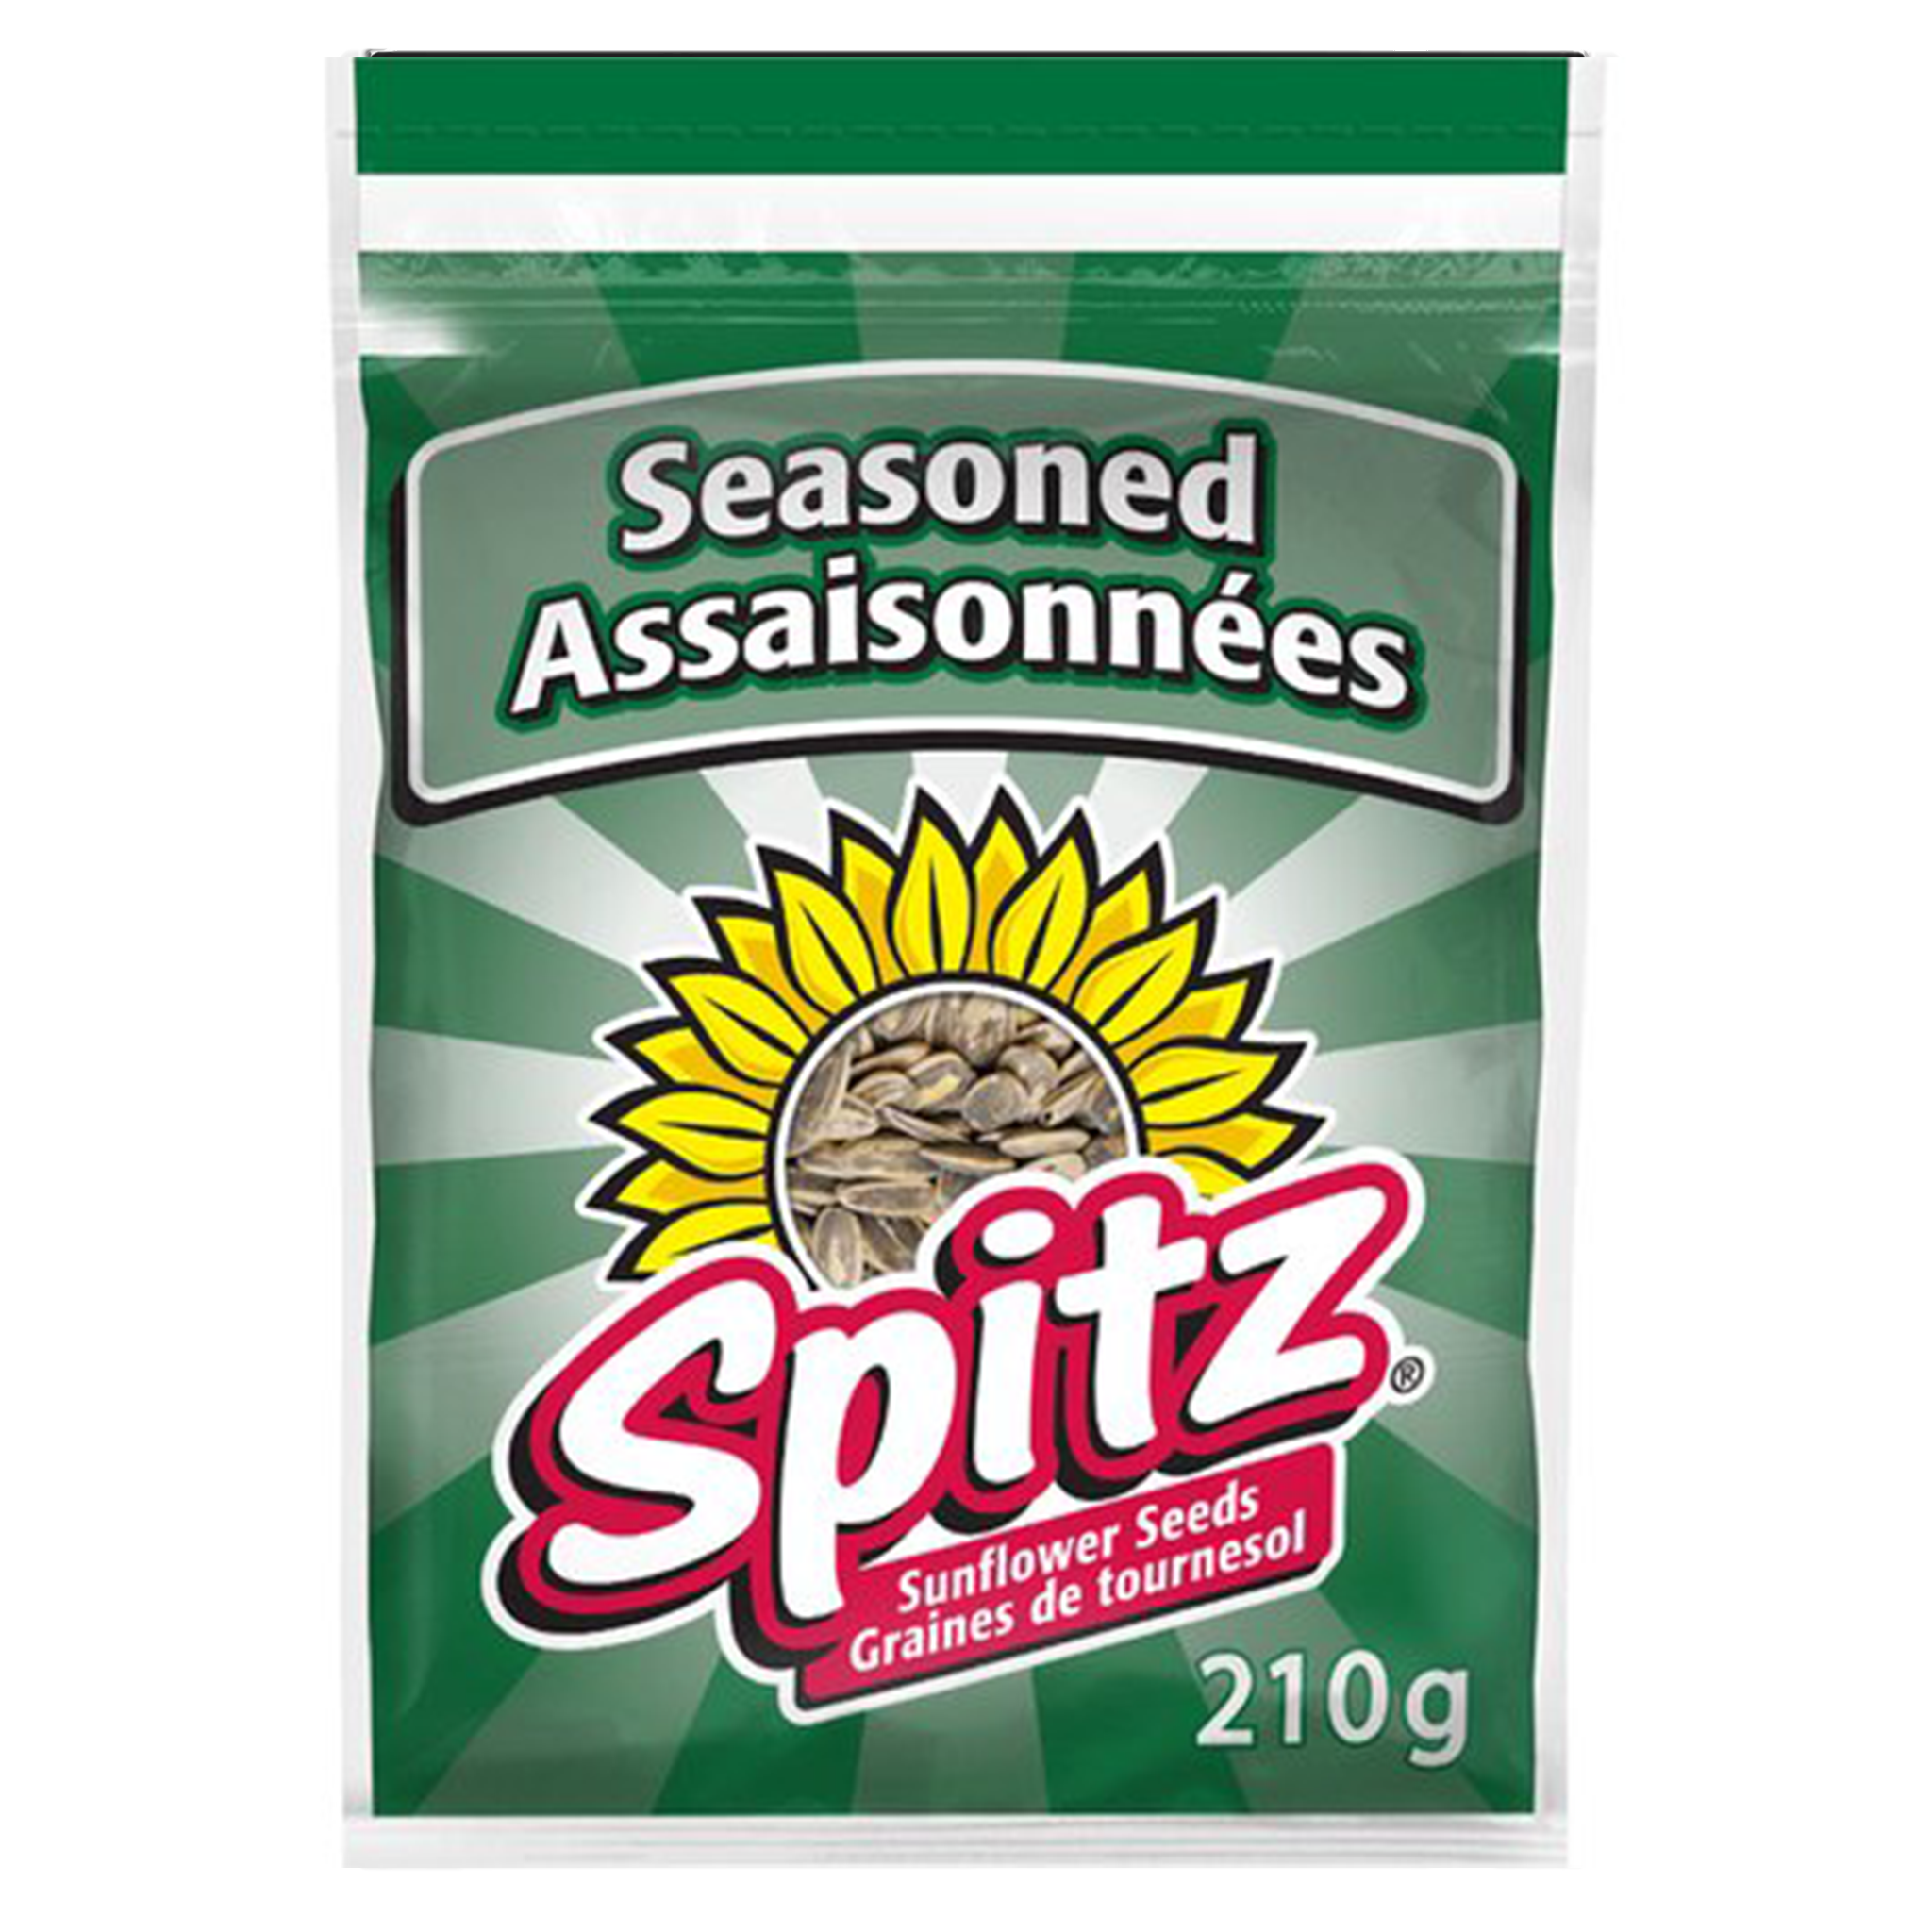 Spitz Sunflower Seeds - Seasoned